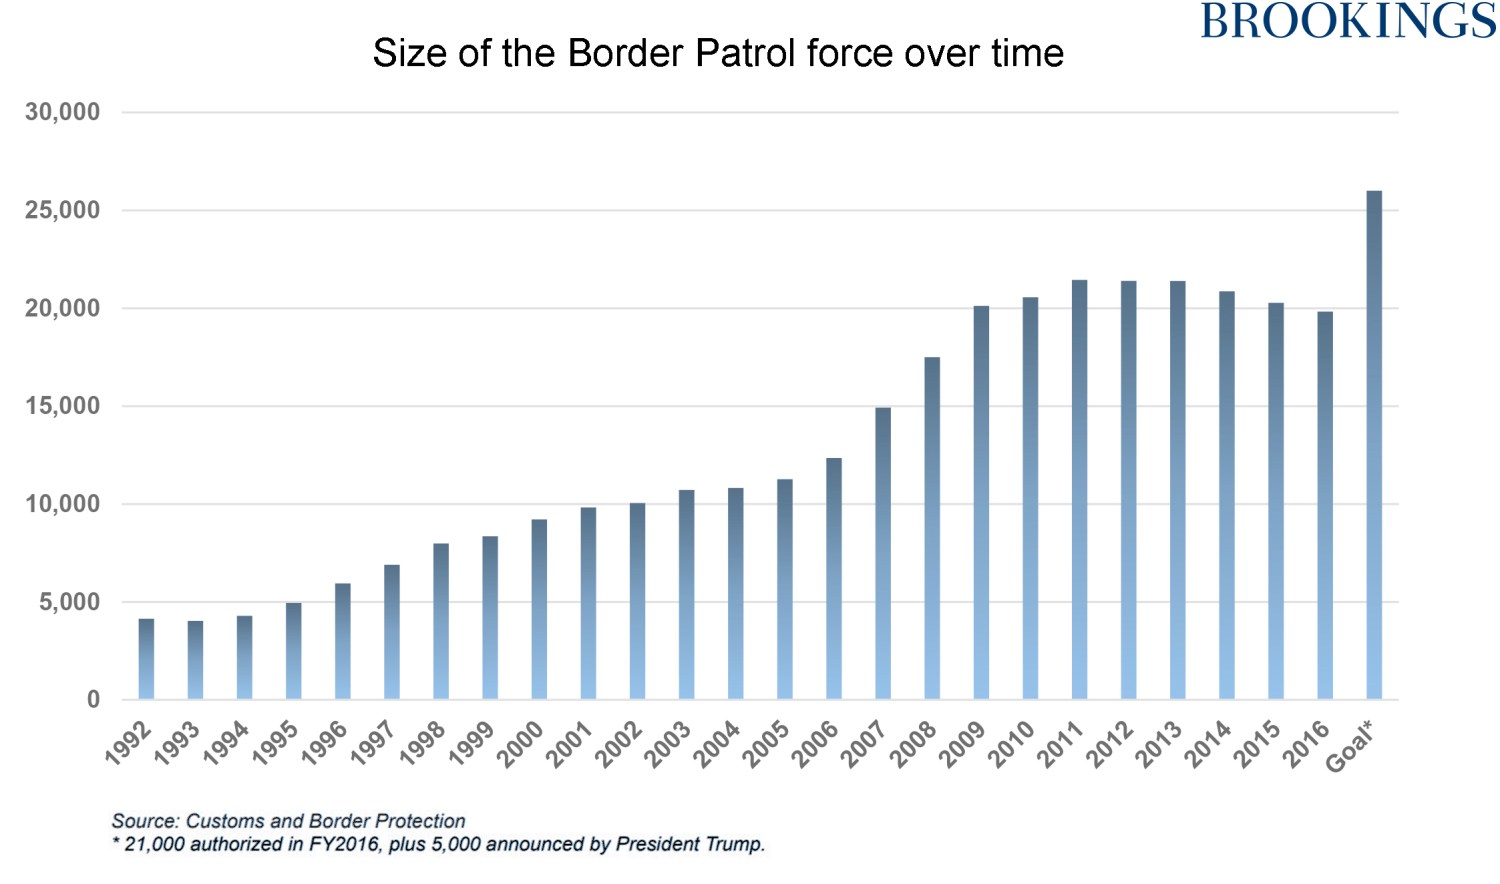 Size of US Border Patrol